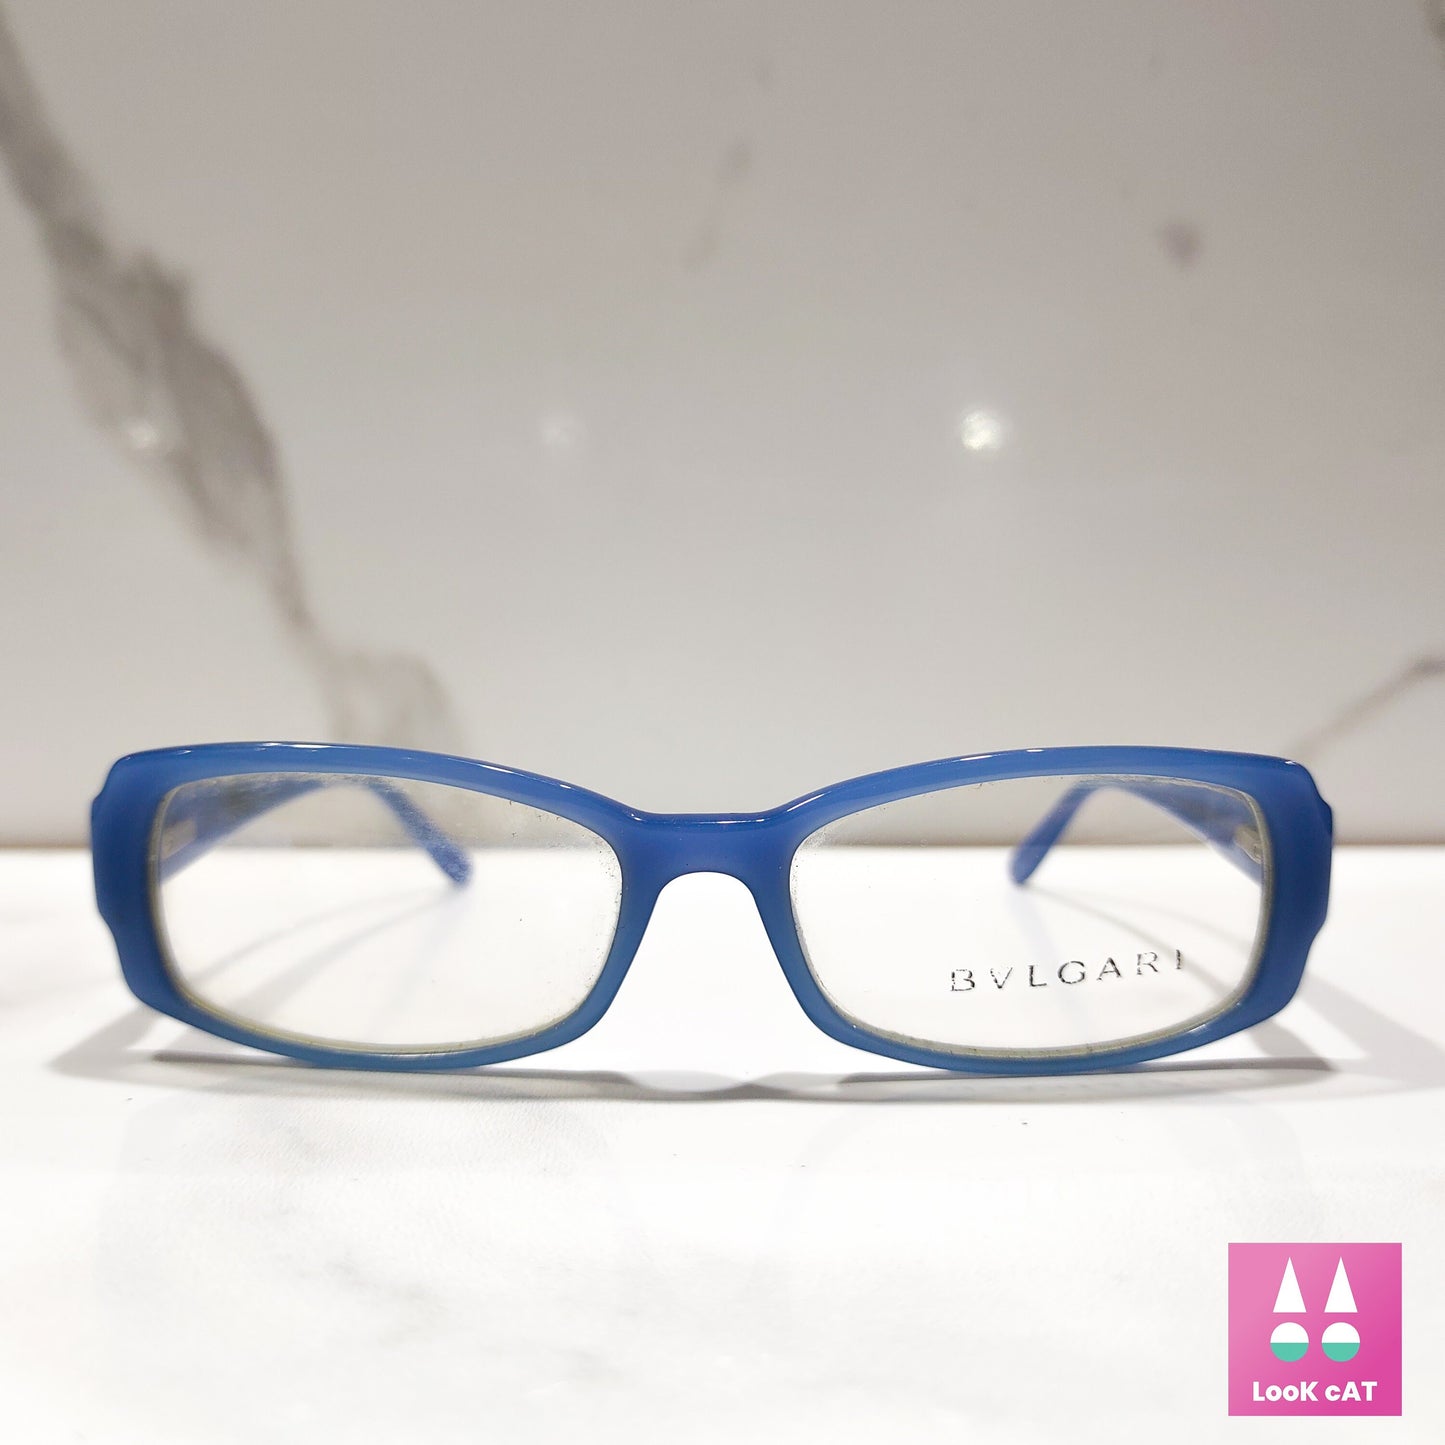 Bvlgari 455 眼镜框眼镜水钻边框 brille y2k 无框色调